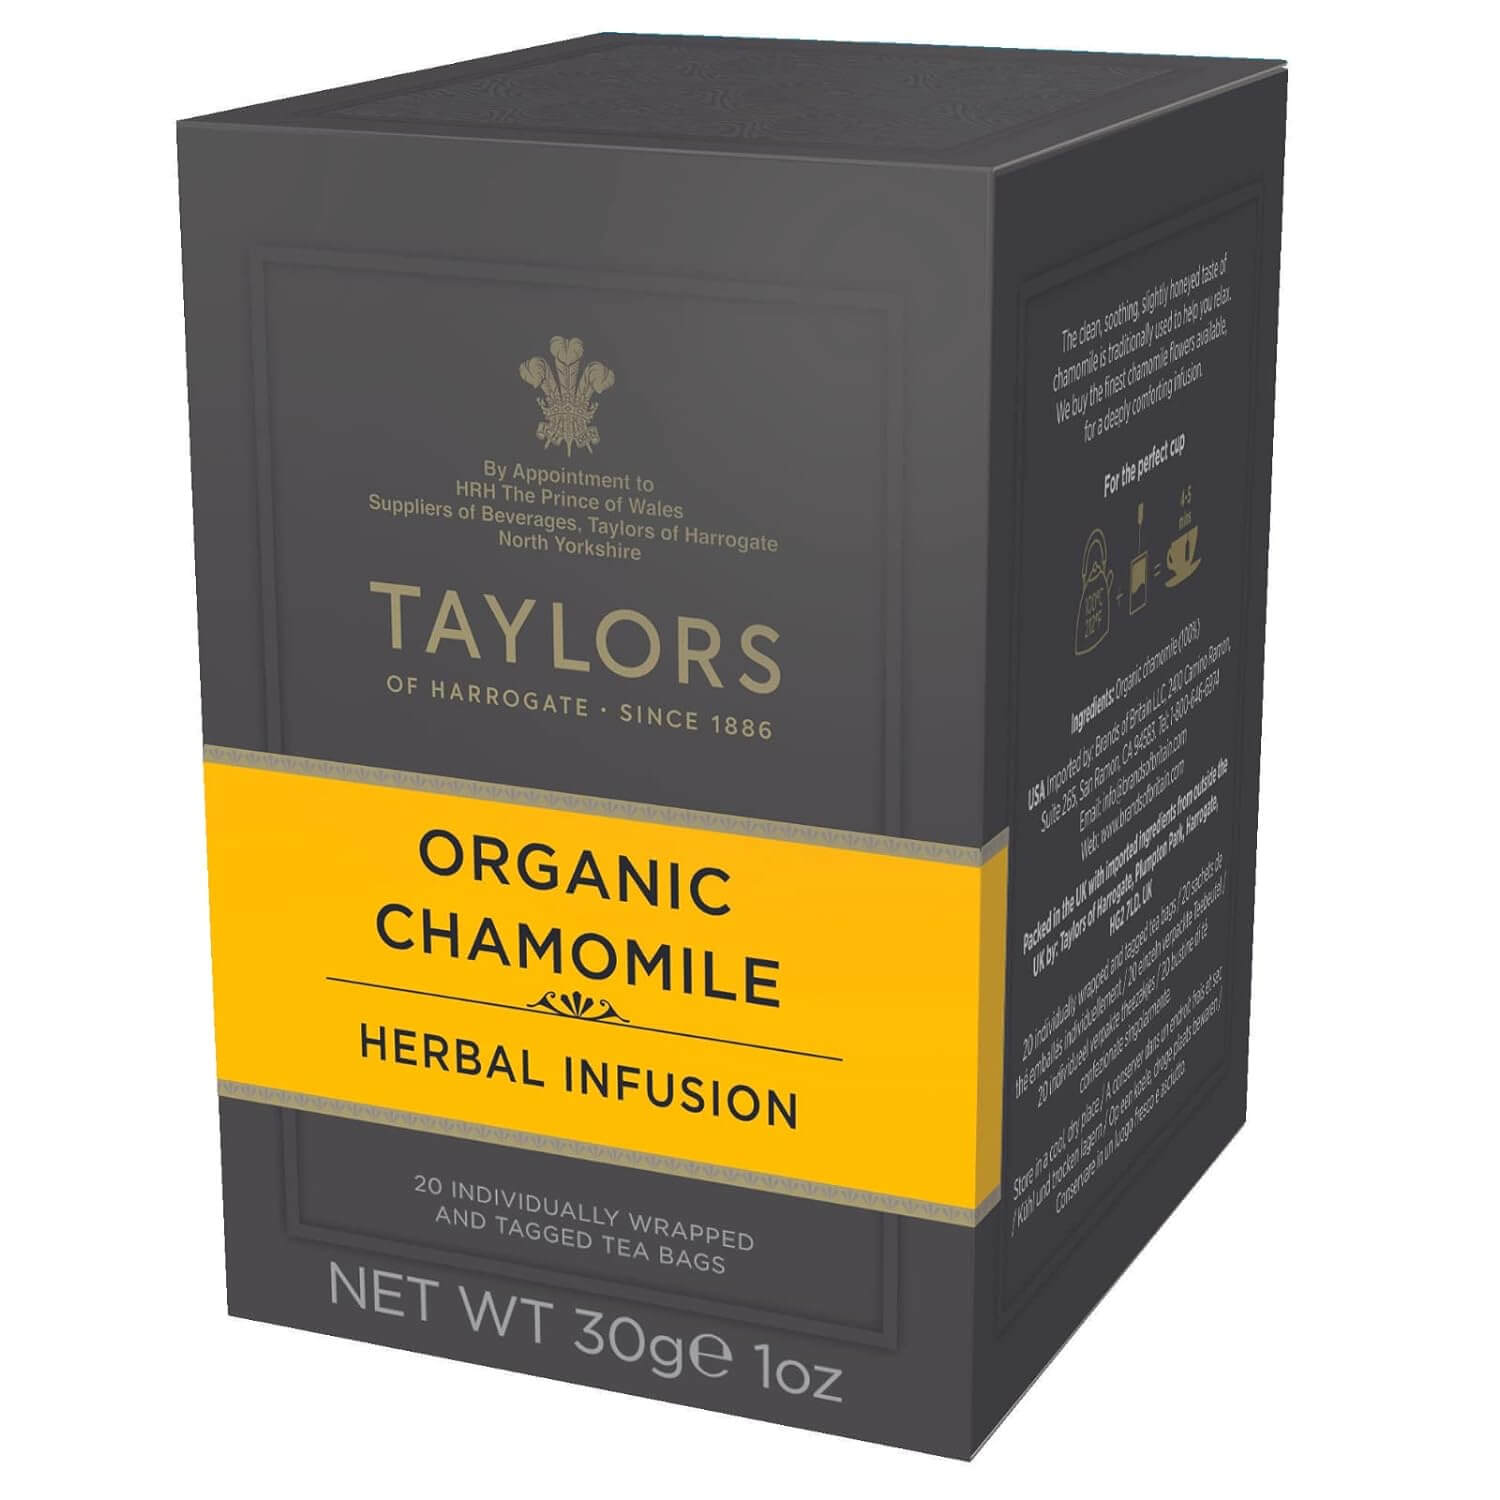 Amazon's Choice: Taylors of Harrogate Organic Chamomile Herbal Tea